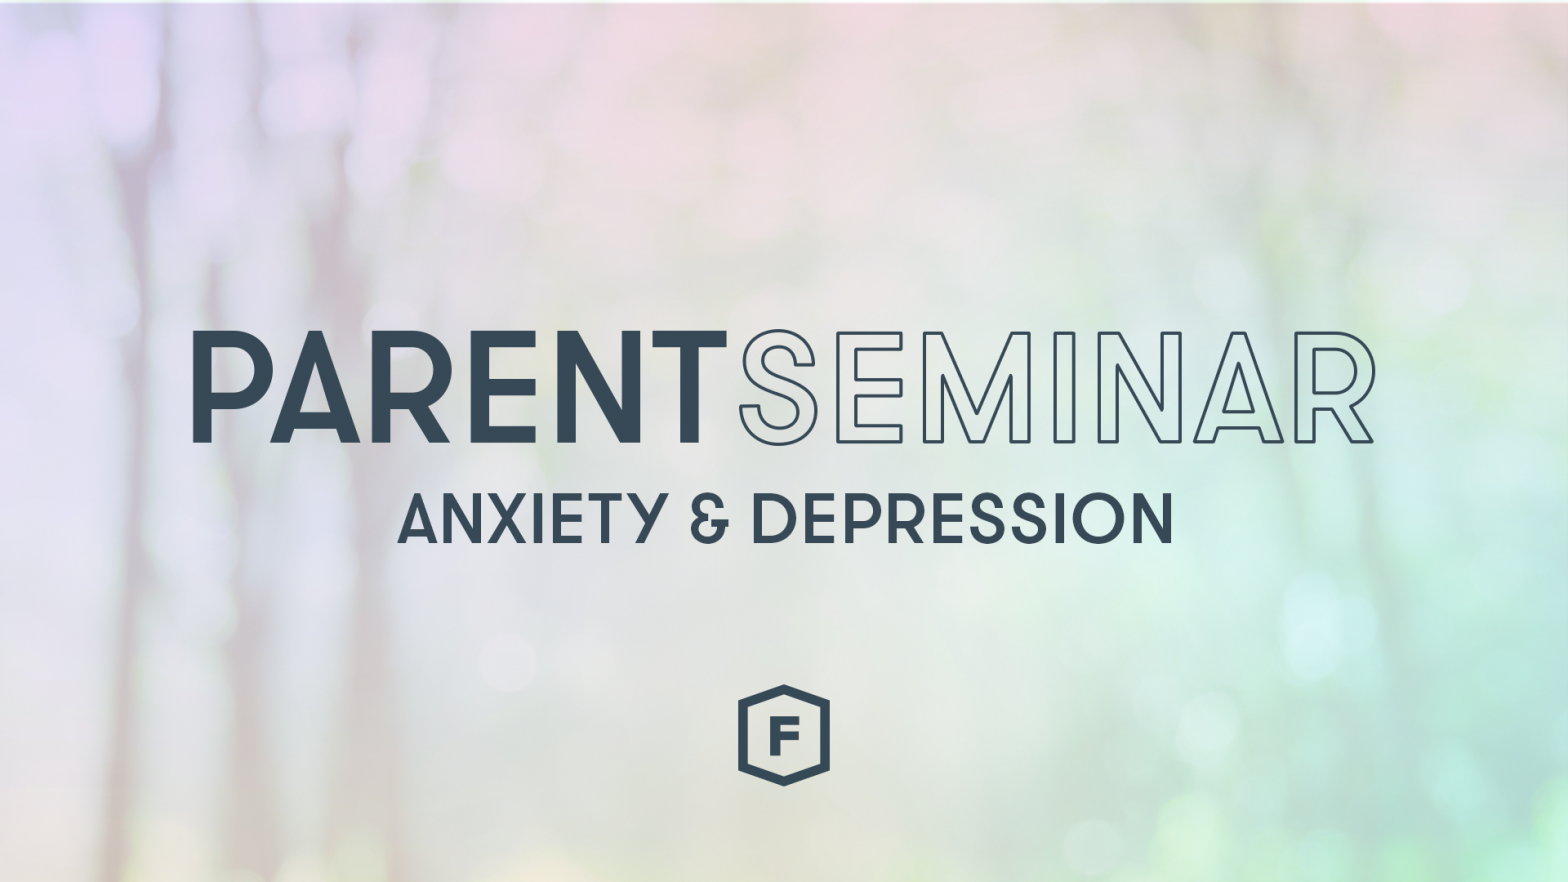 Parent Seminar – Anxiety & Depression event image